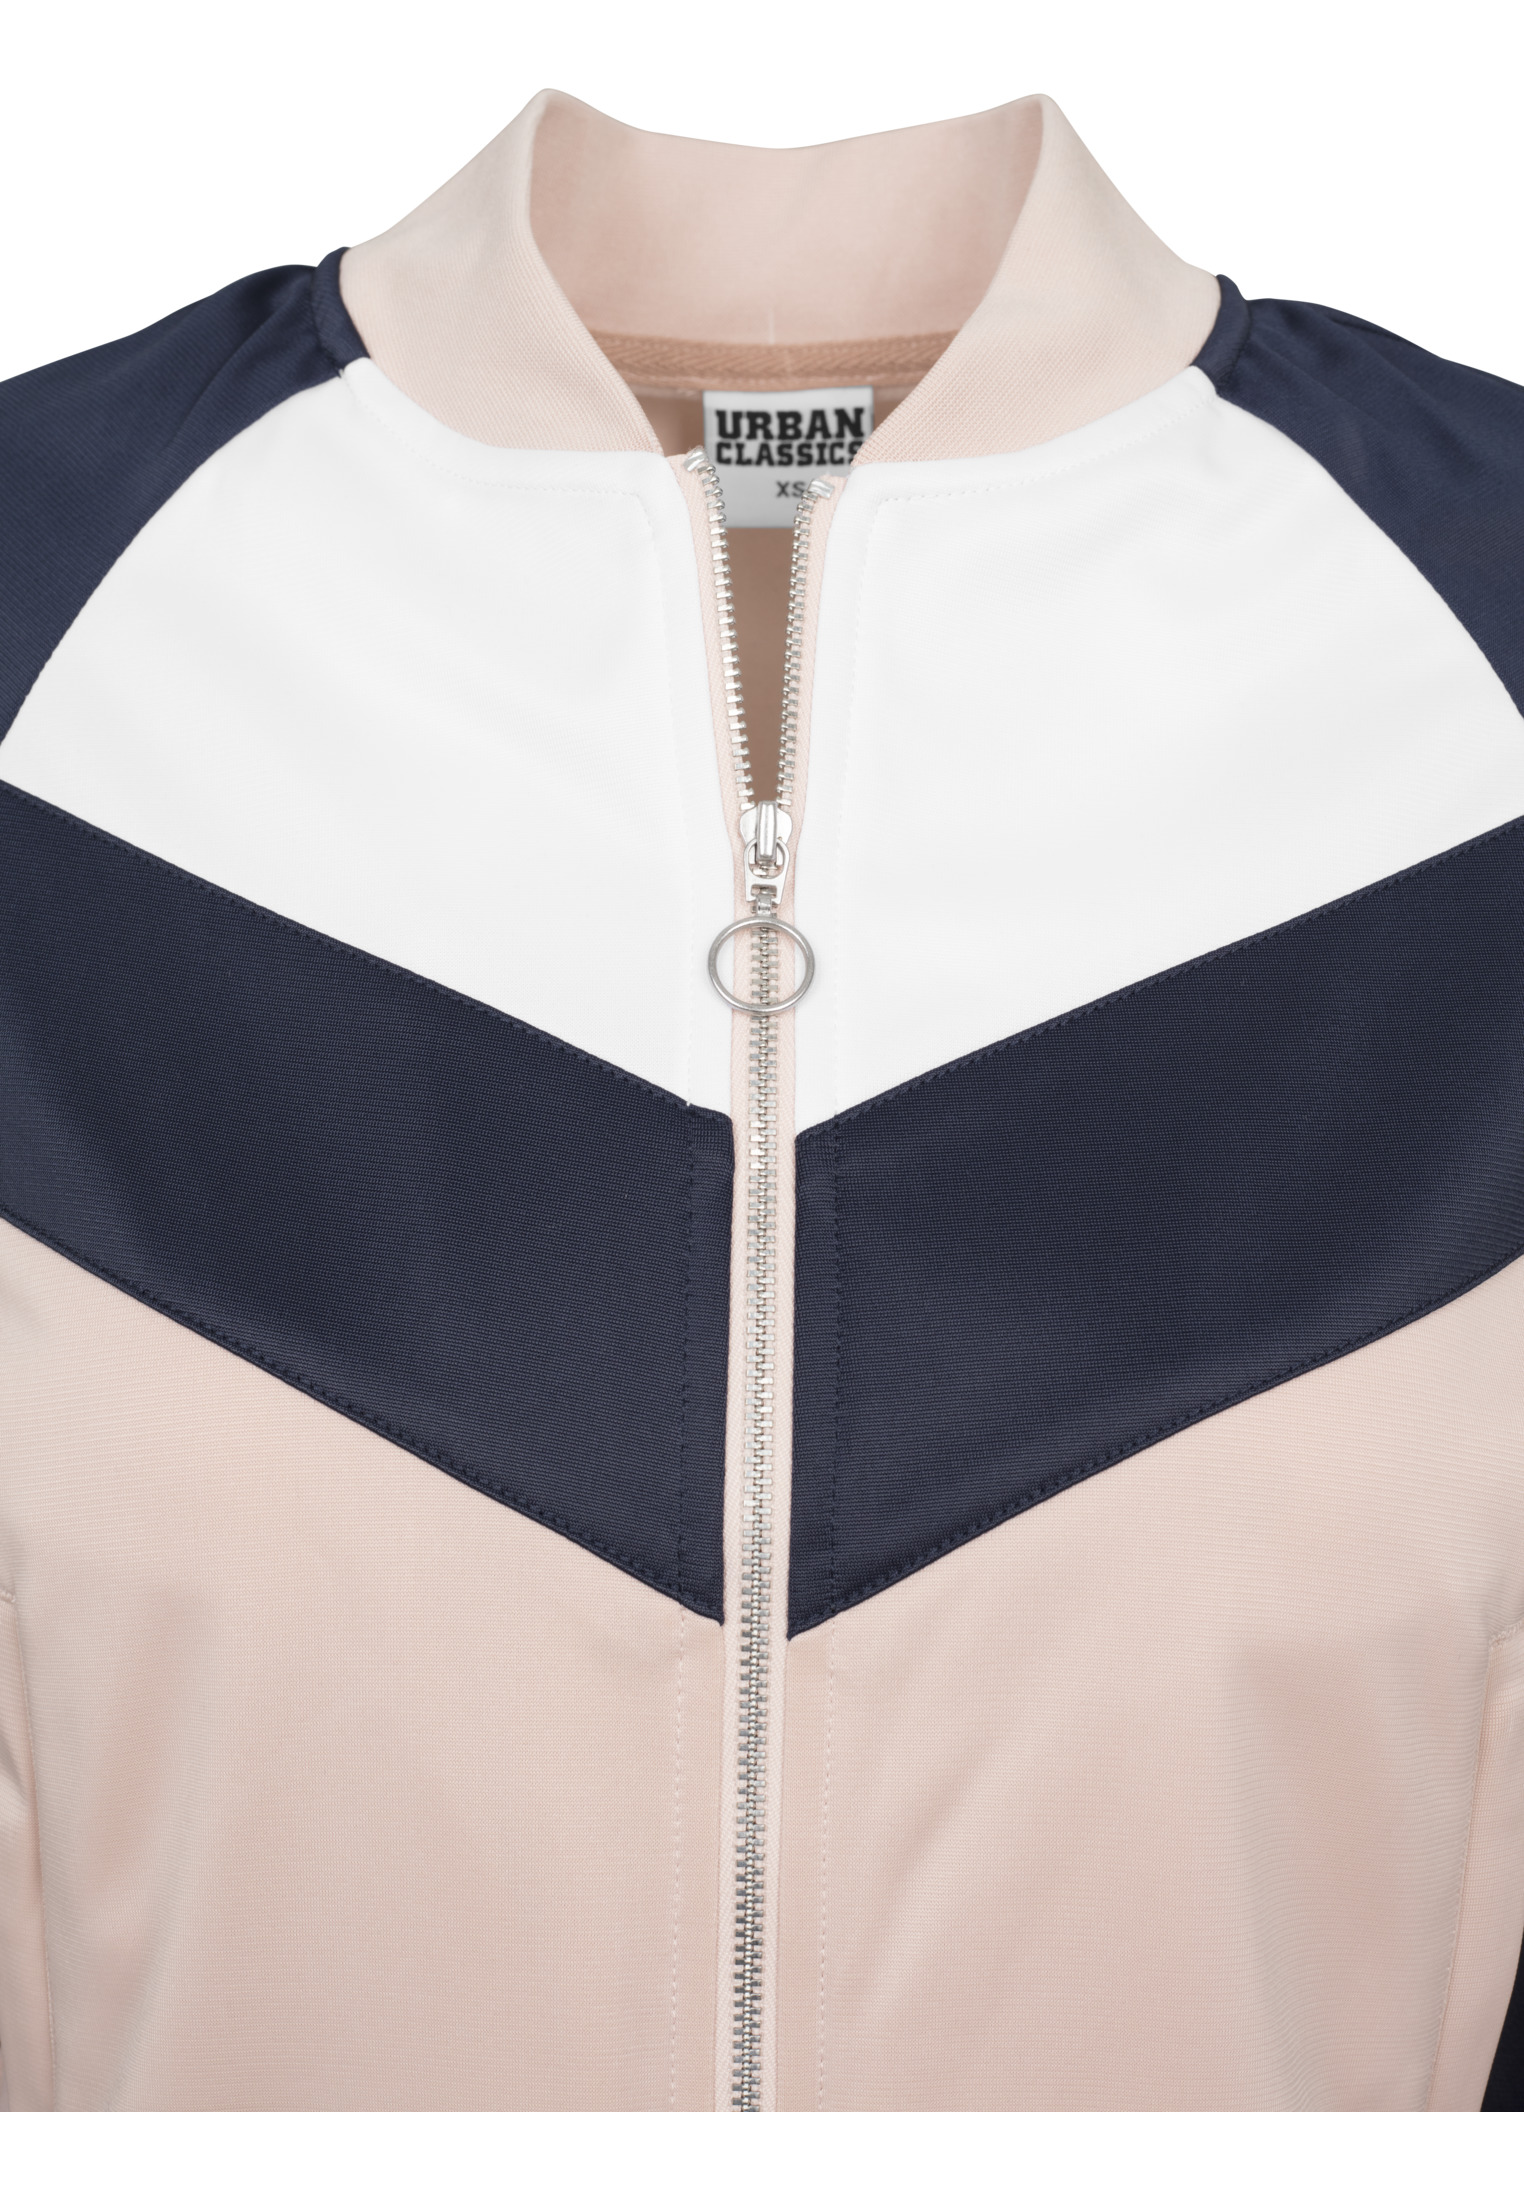 Light Jackets Ladies Short Raglan Track Jacket in Farbe light rose/navy/white